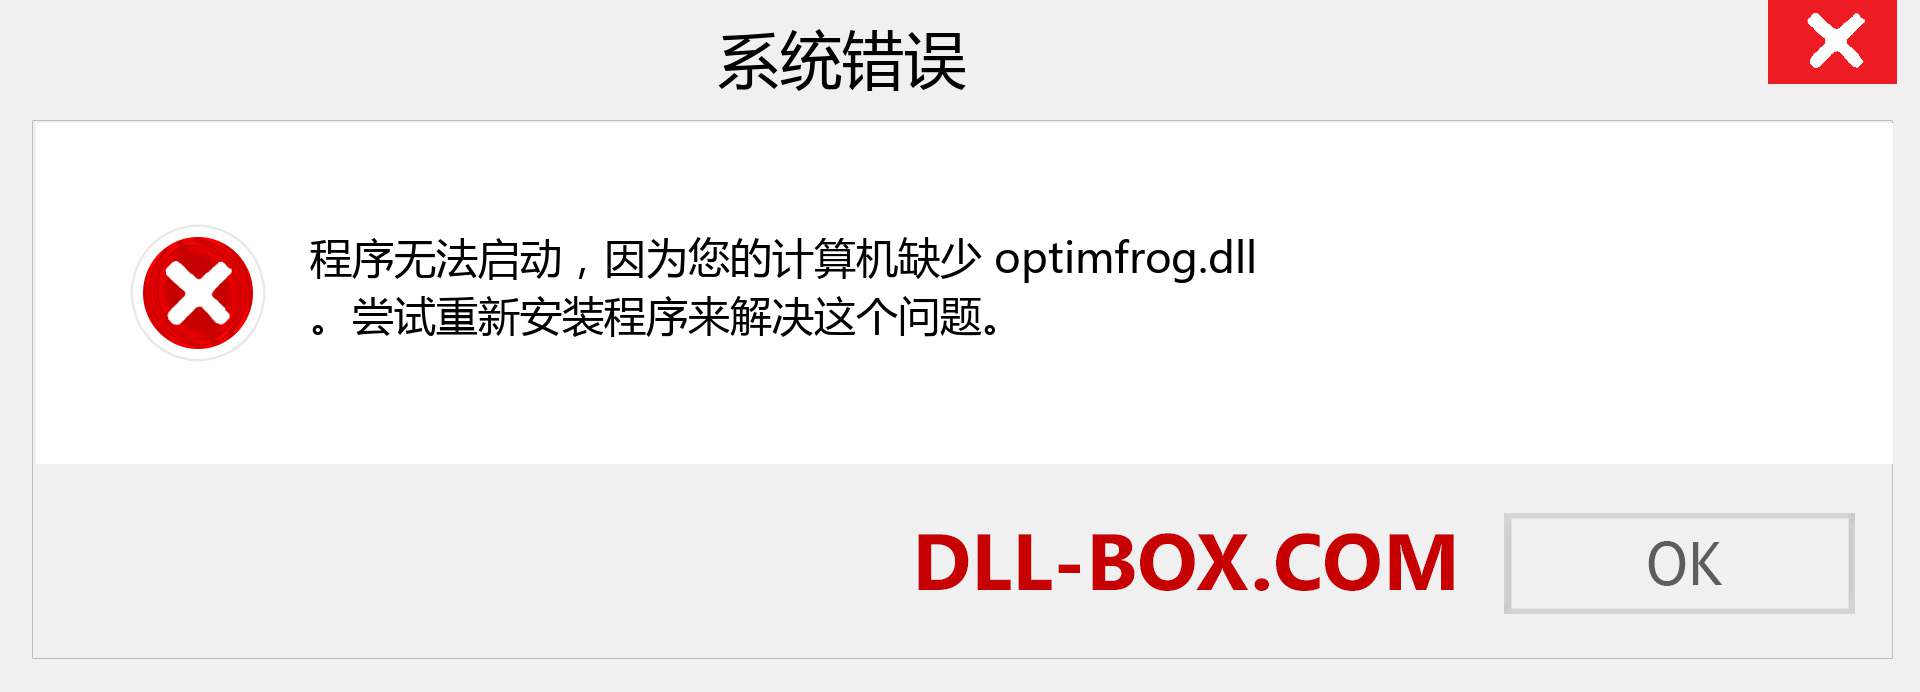 optimfrog.dll 文件丢失？。 适用于 Windows 7、8、10 的下载 - 修复 Windows、照片、图像上的 optimfrog dll 丢失错误